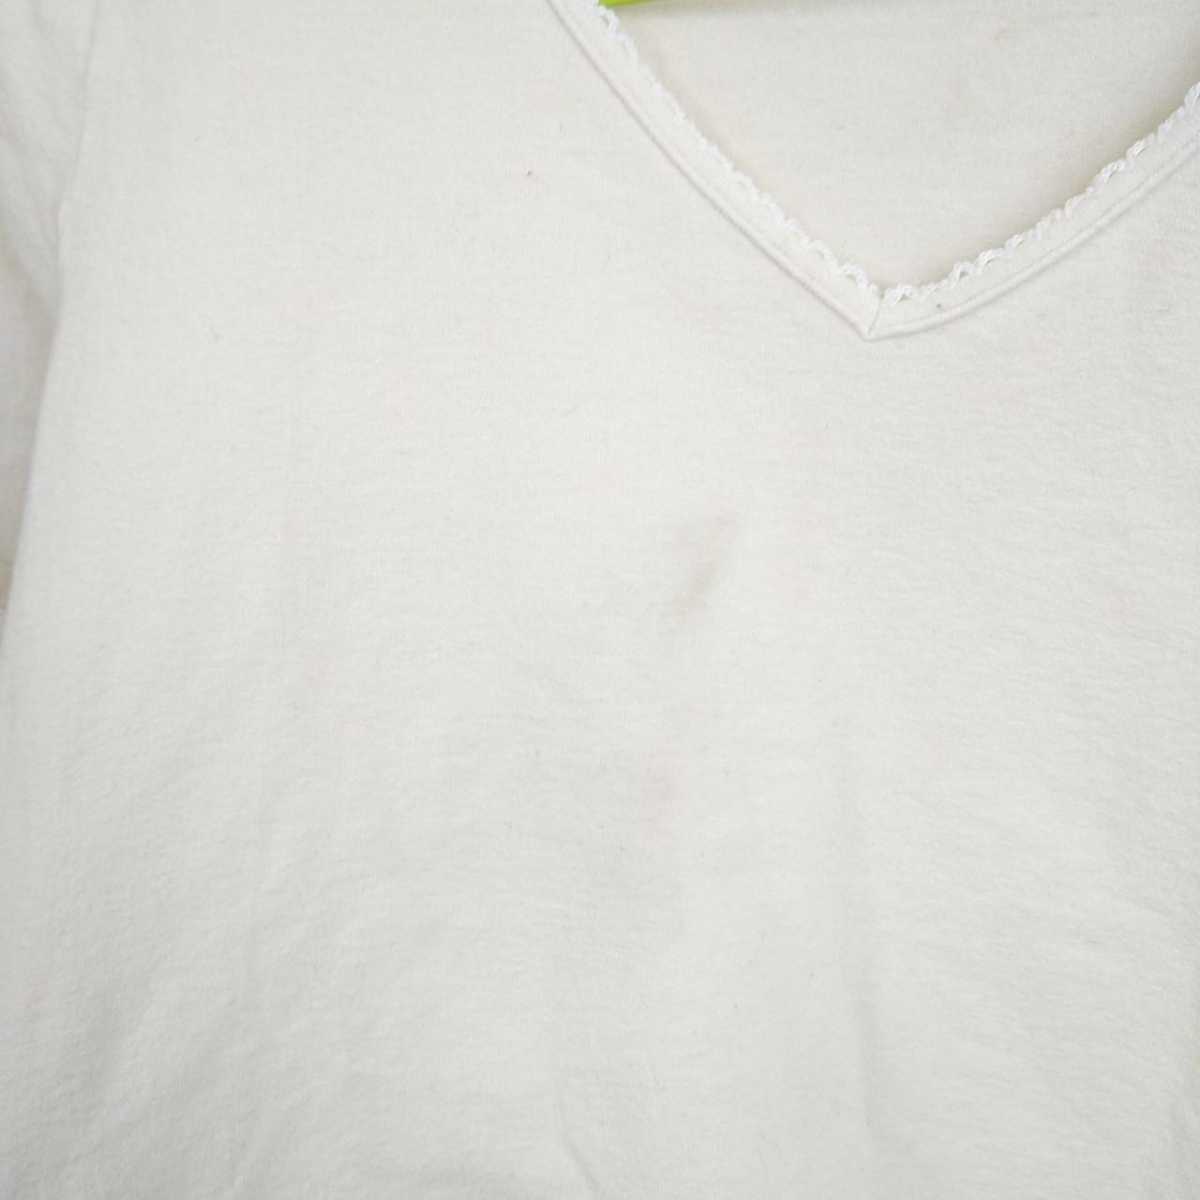 F2145L*JILL STUART Jill Stuart * размер M короткий рукав футболка футболка cut and sewn белый женский простой сделано в Японии одноцветный V шея 